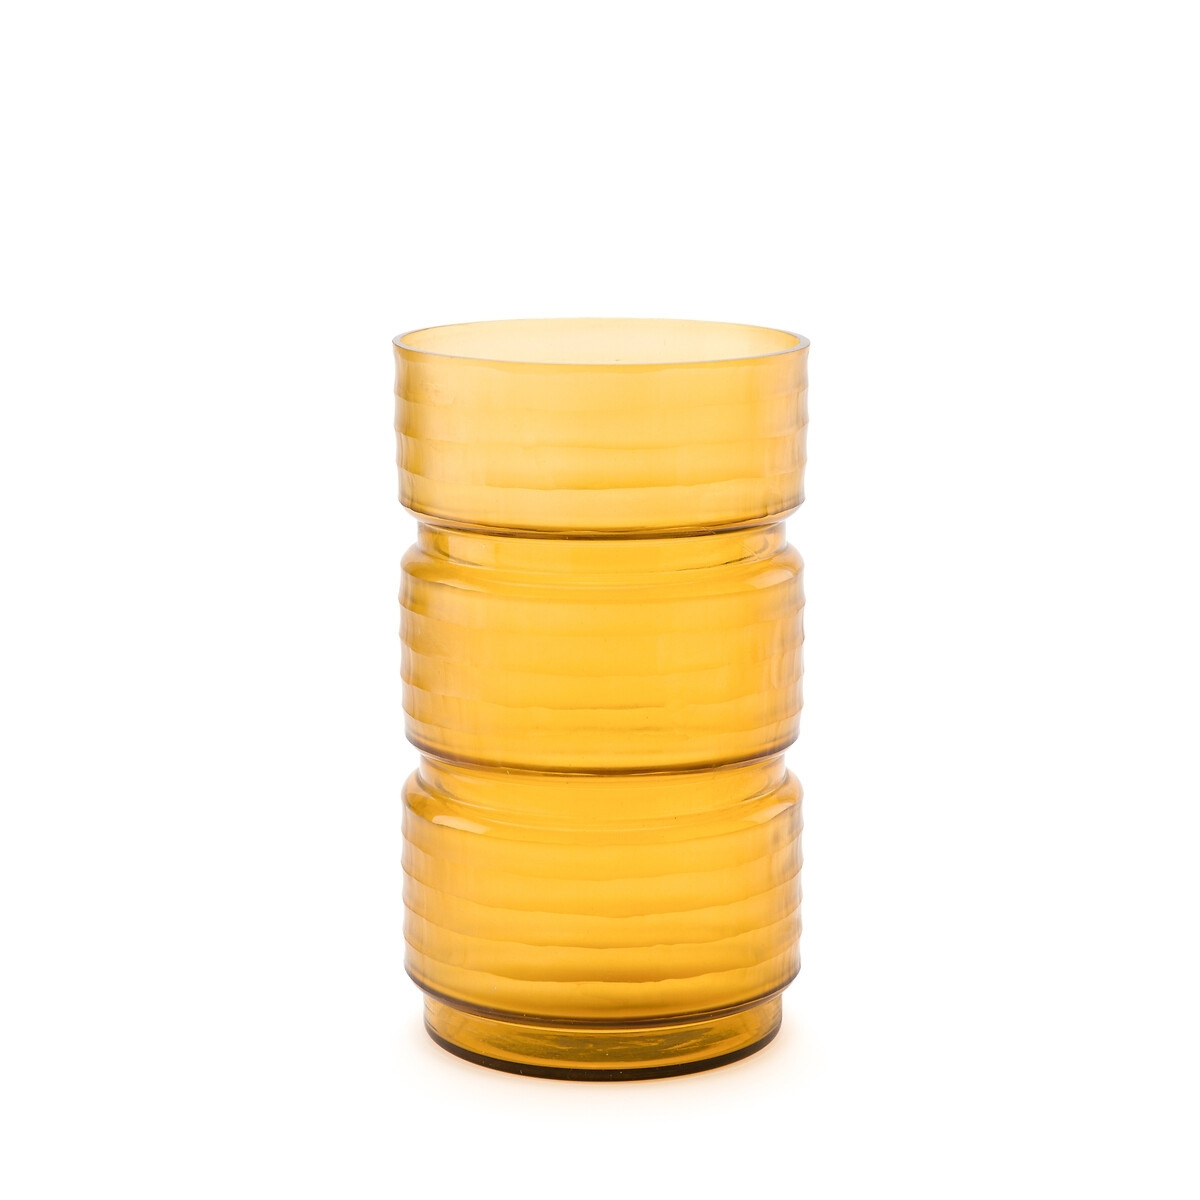 Sunira Transparent Yellow Glass Vase - image 1